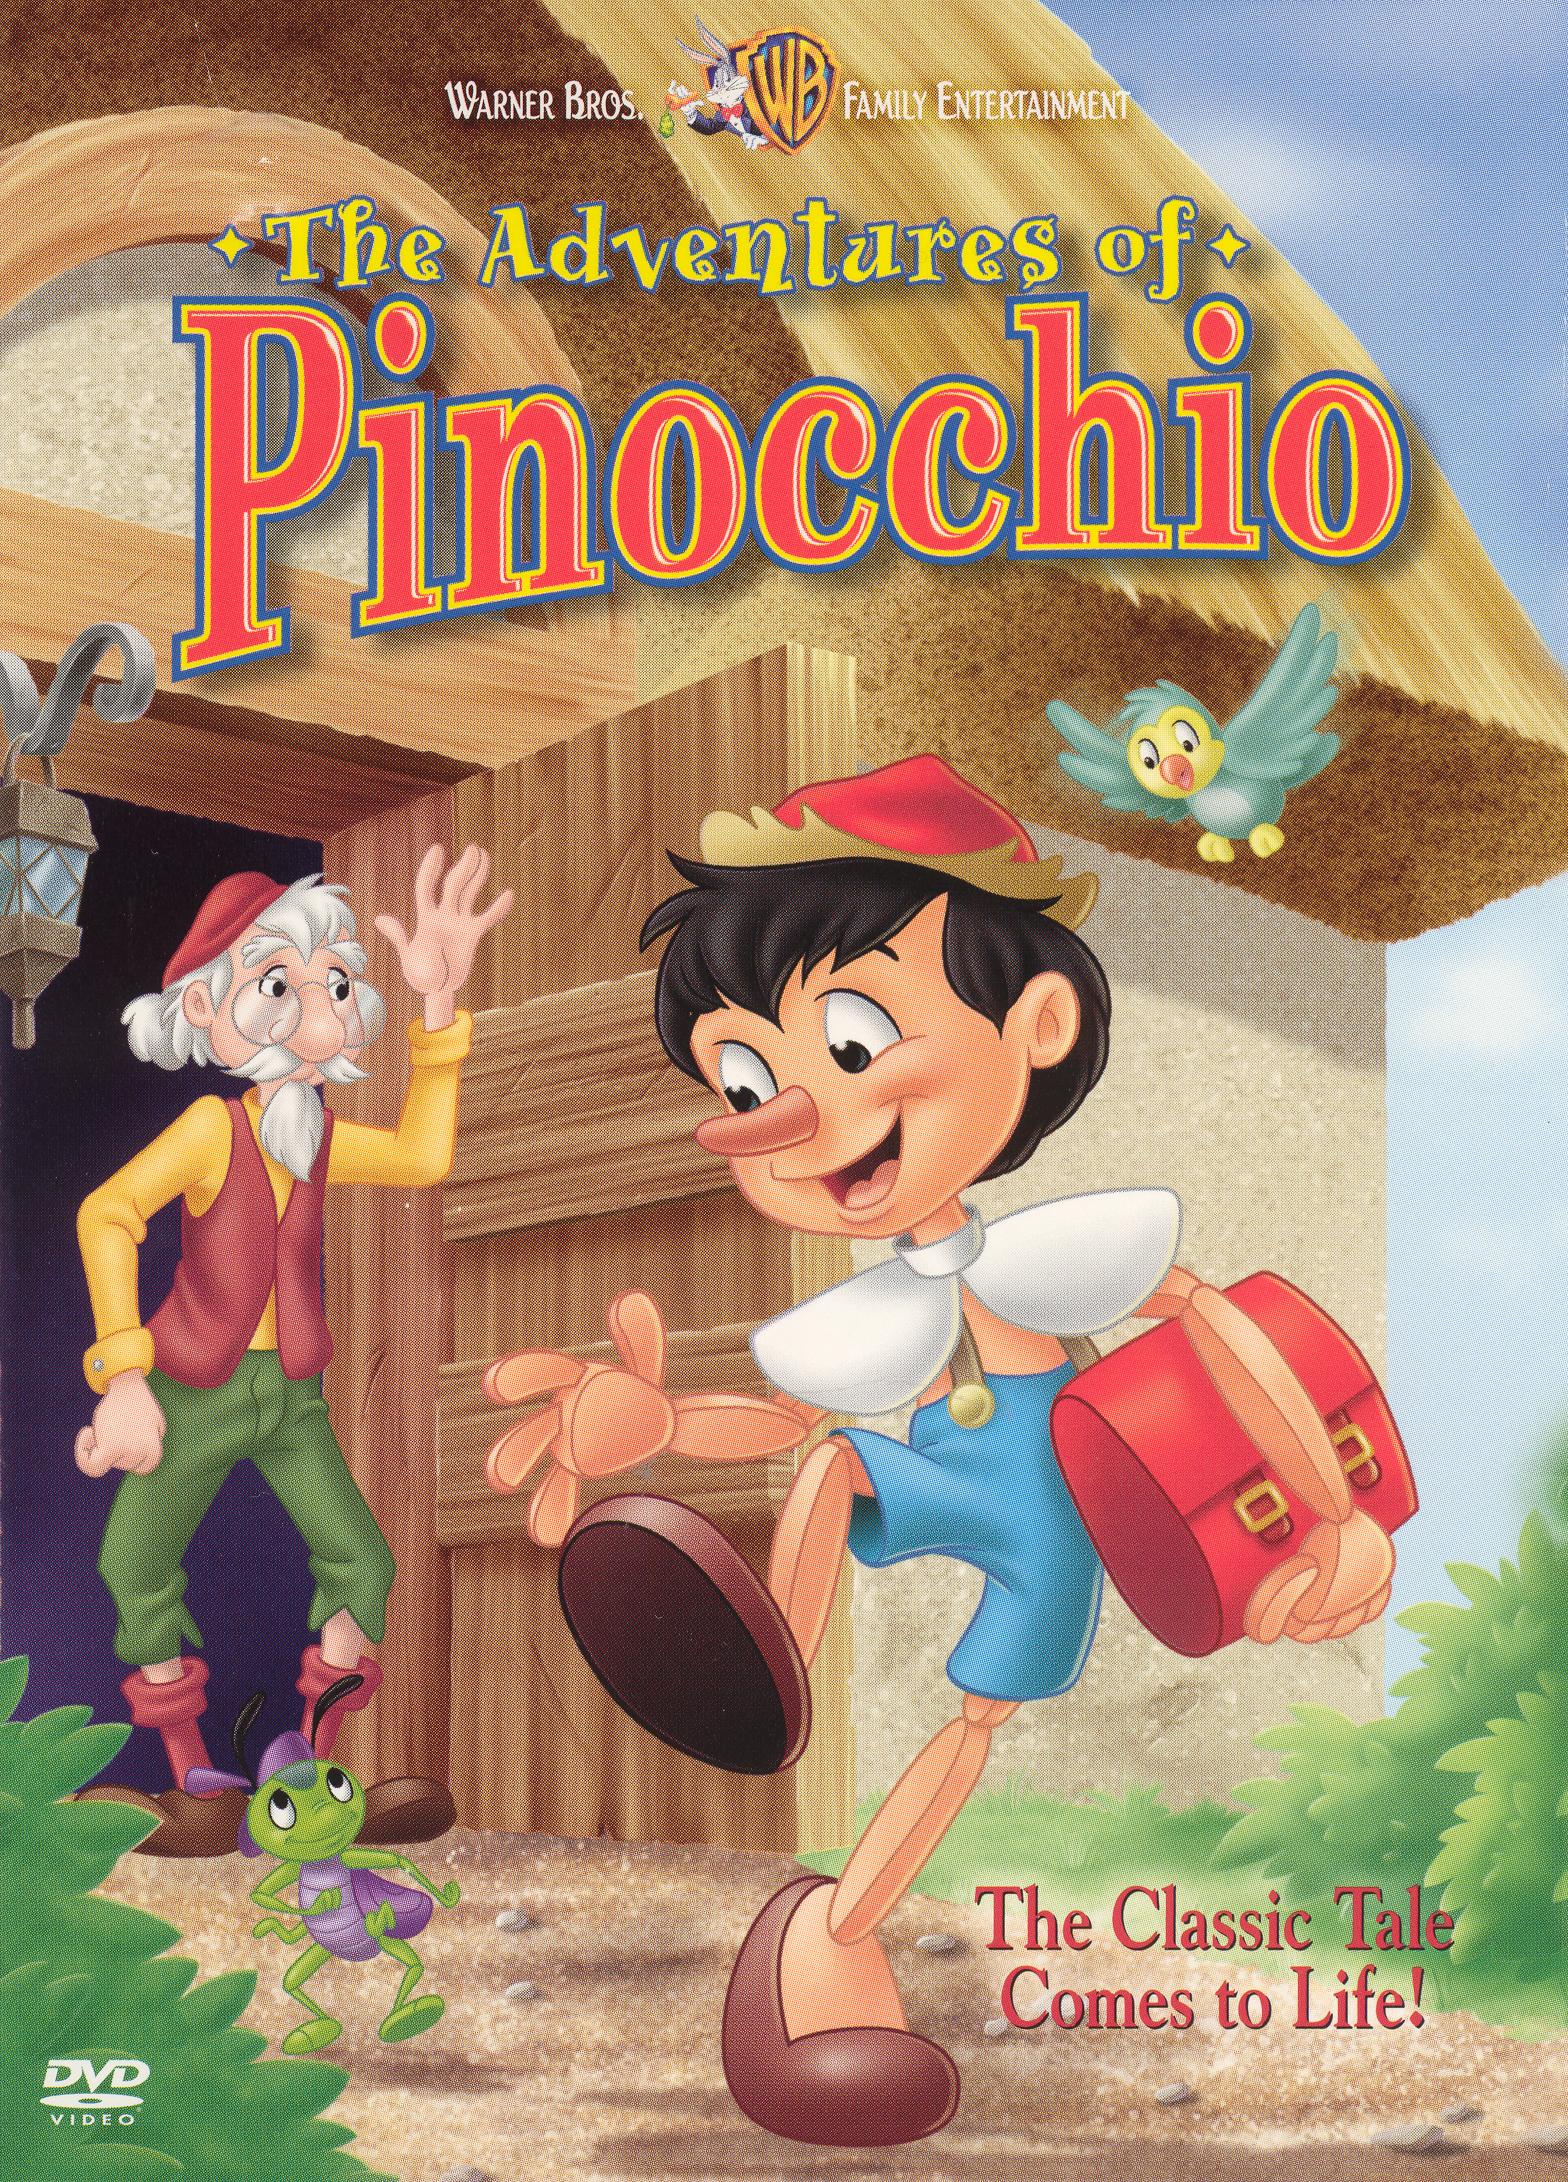 theme of pinocchio story